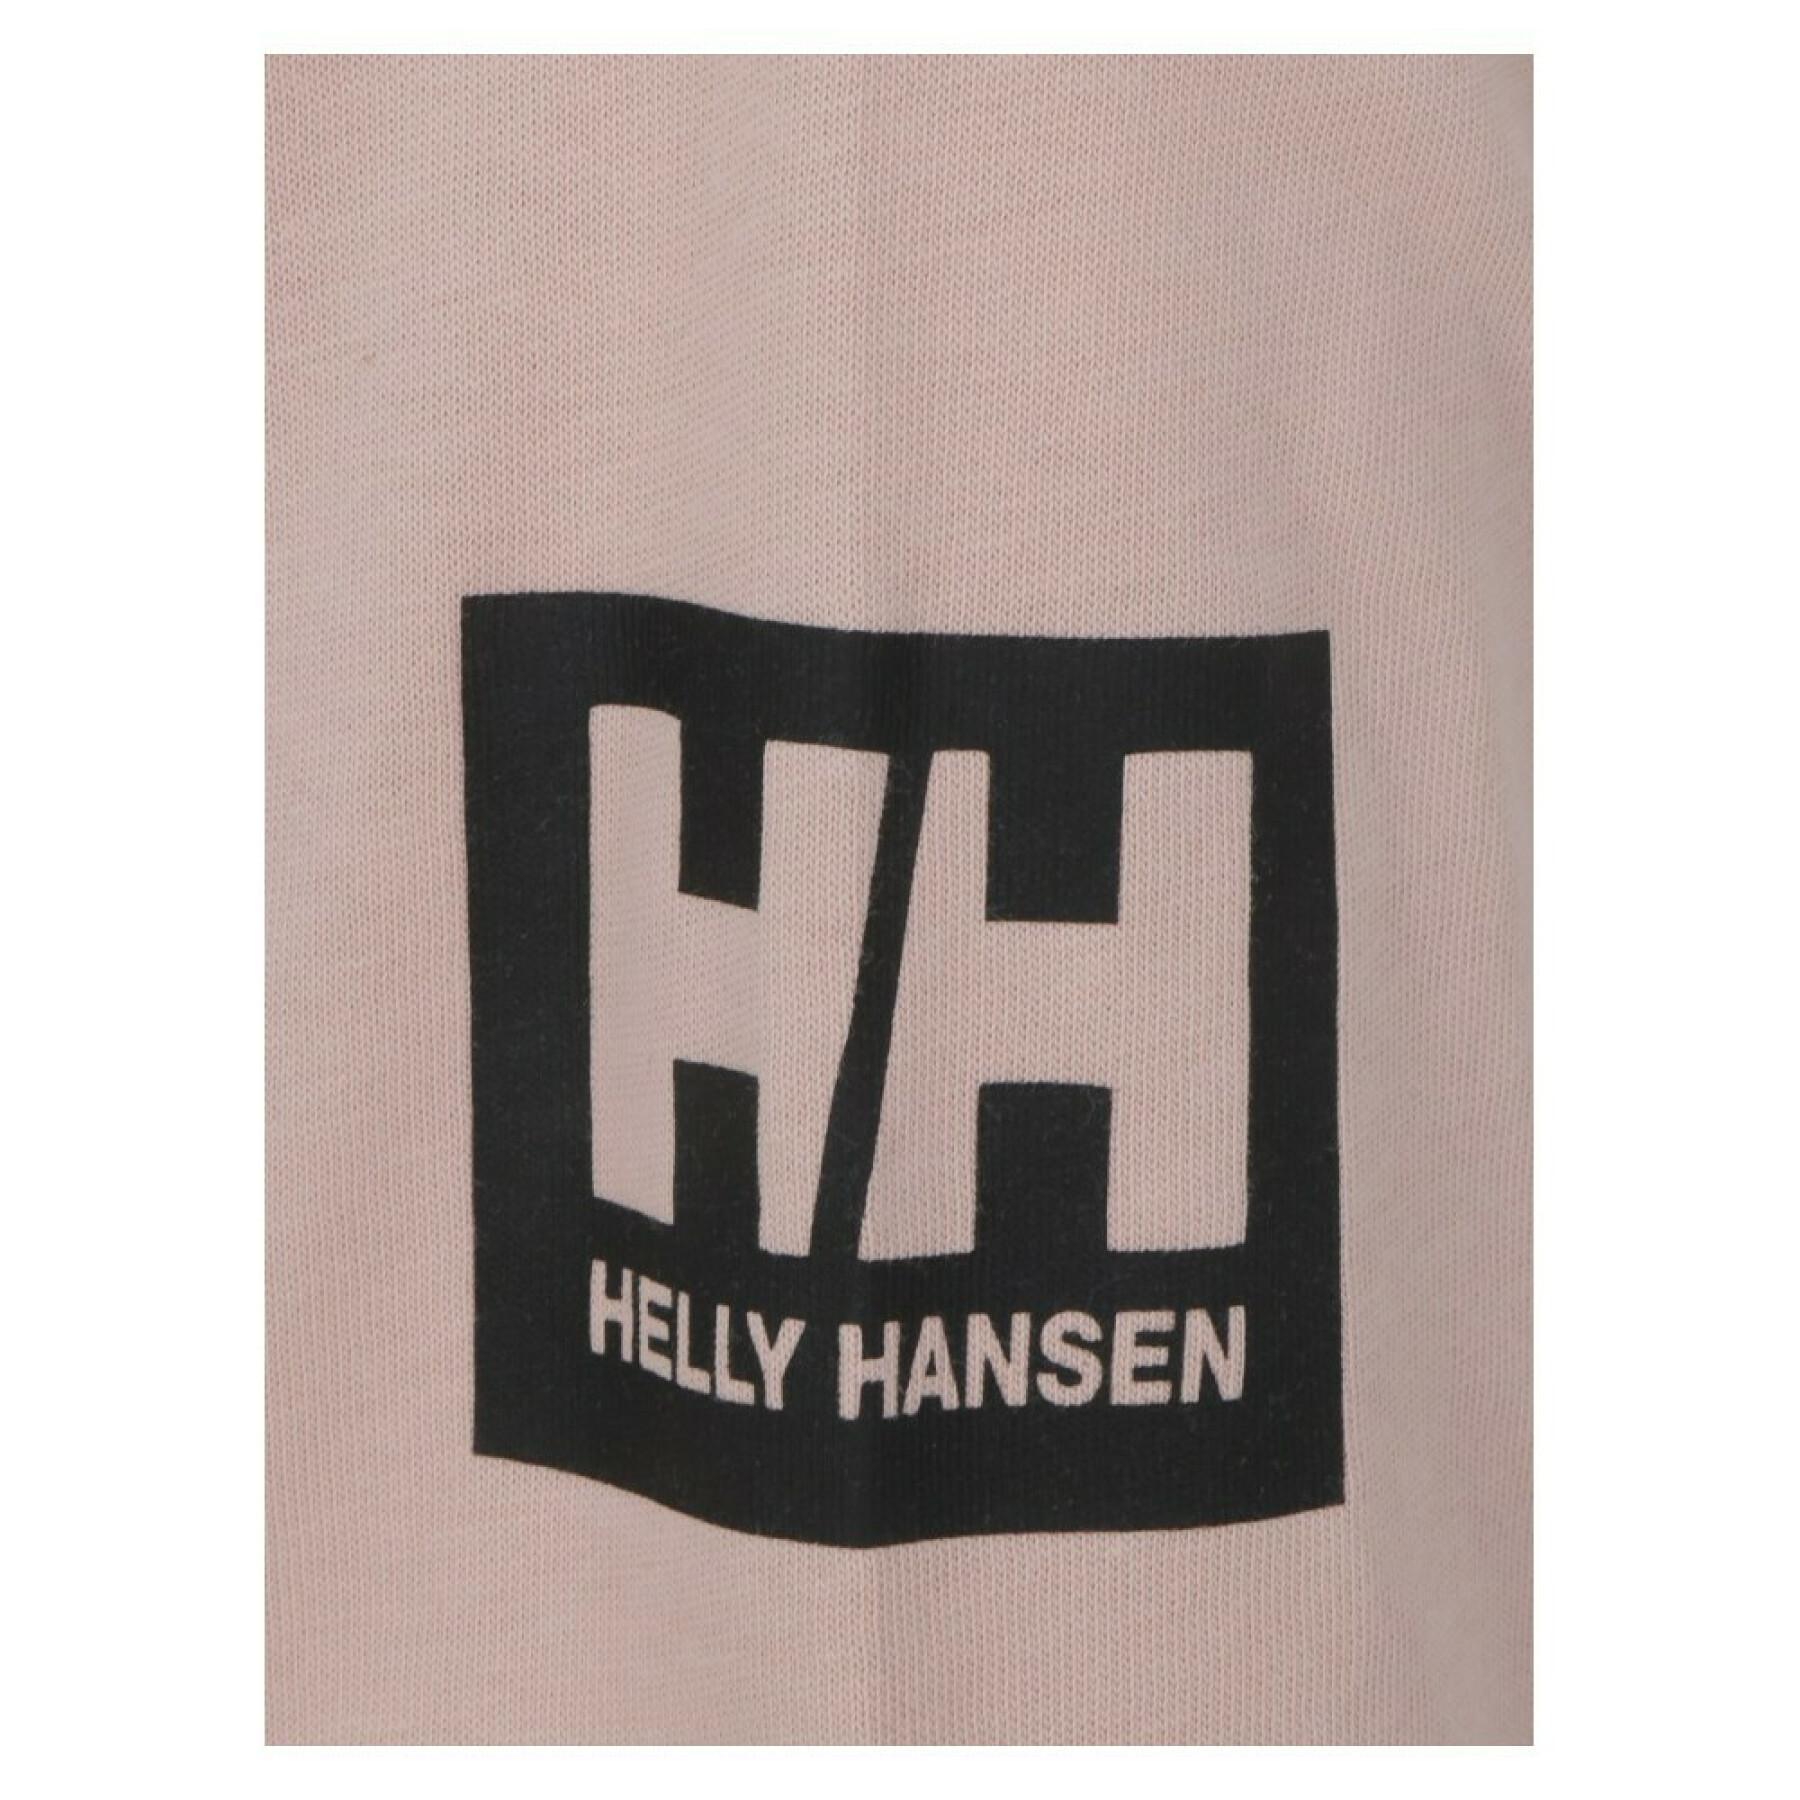 Camiseta Helly Hansen Arc 22 block